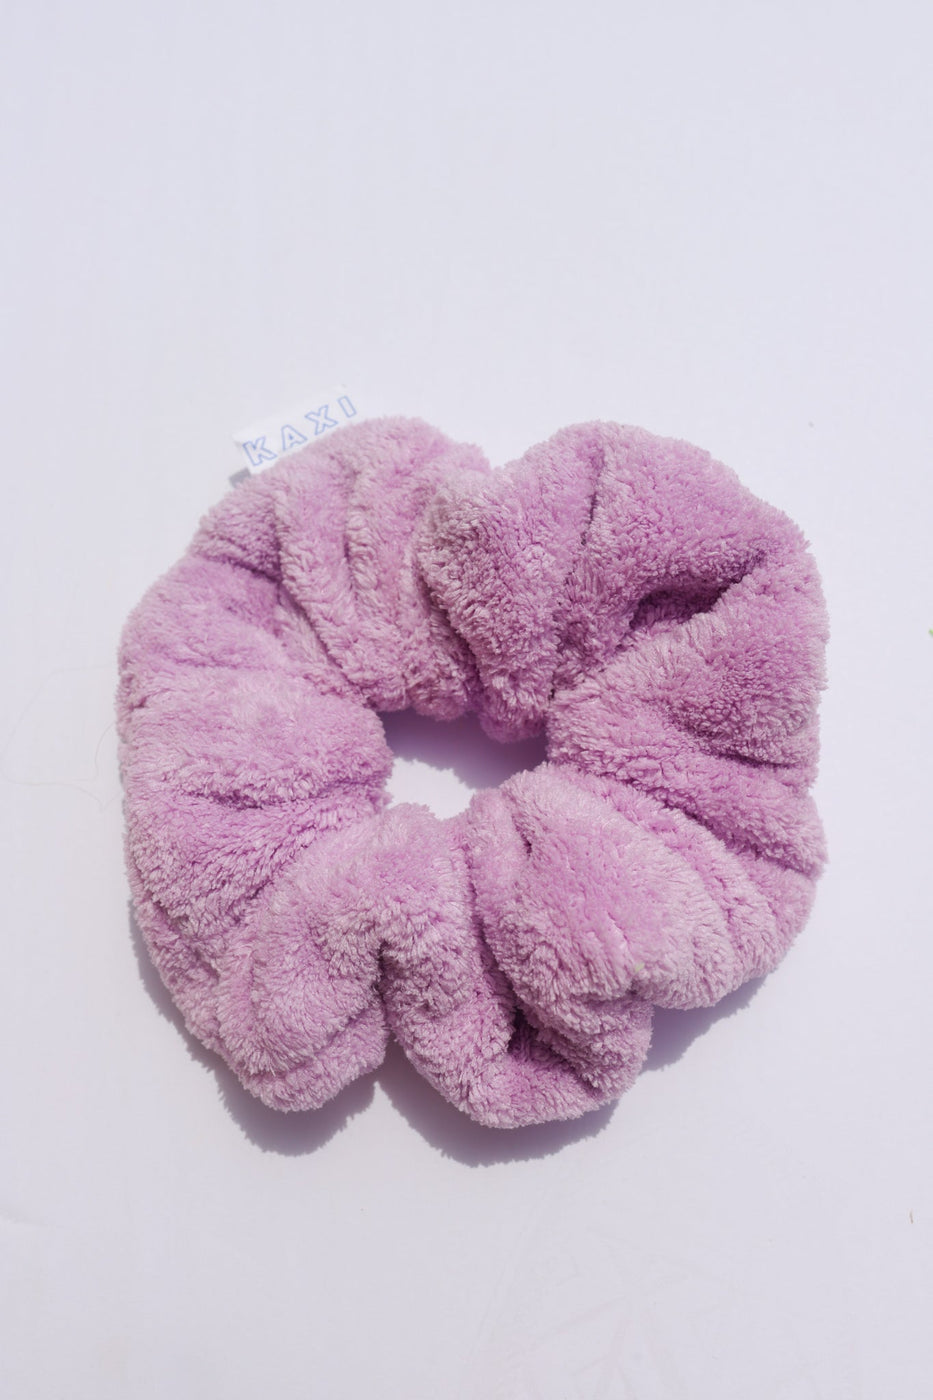 a purple hair scrunchie on a white surface